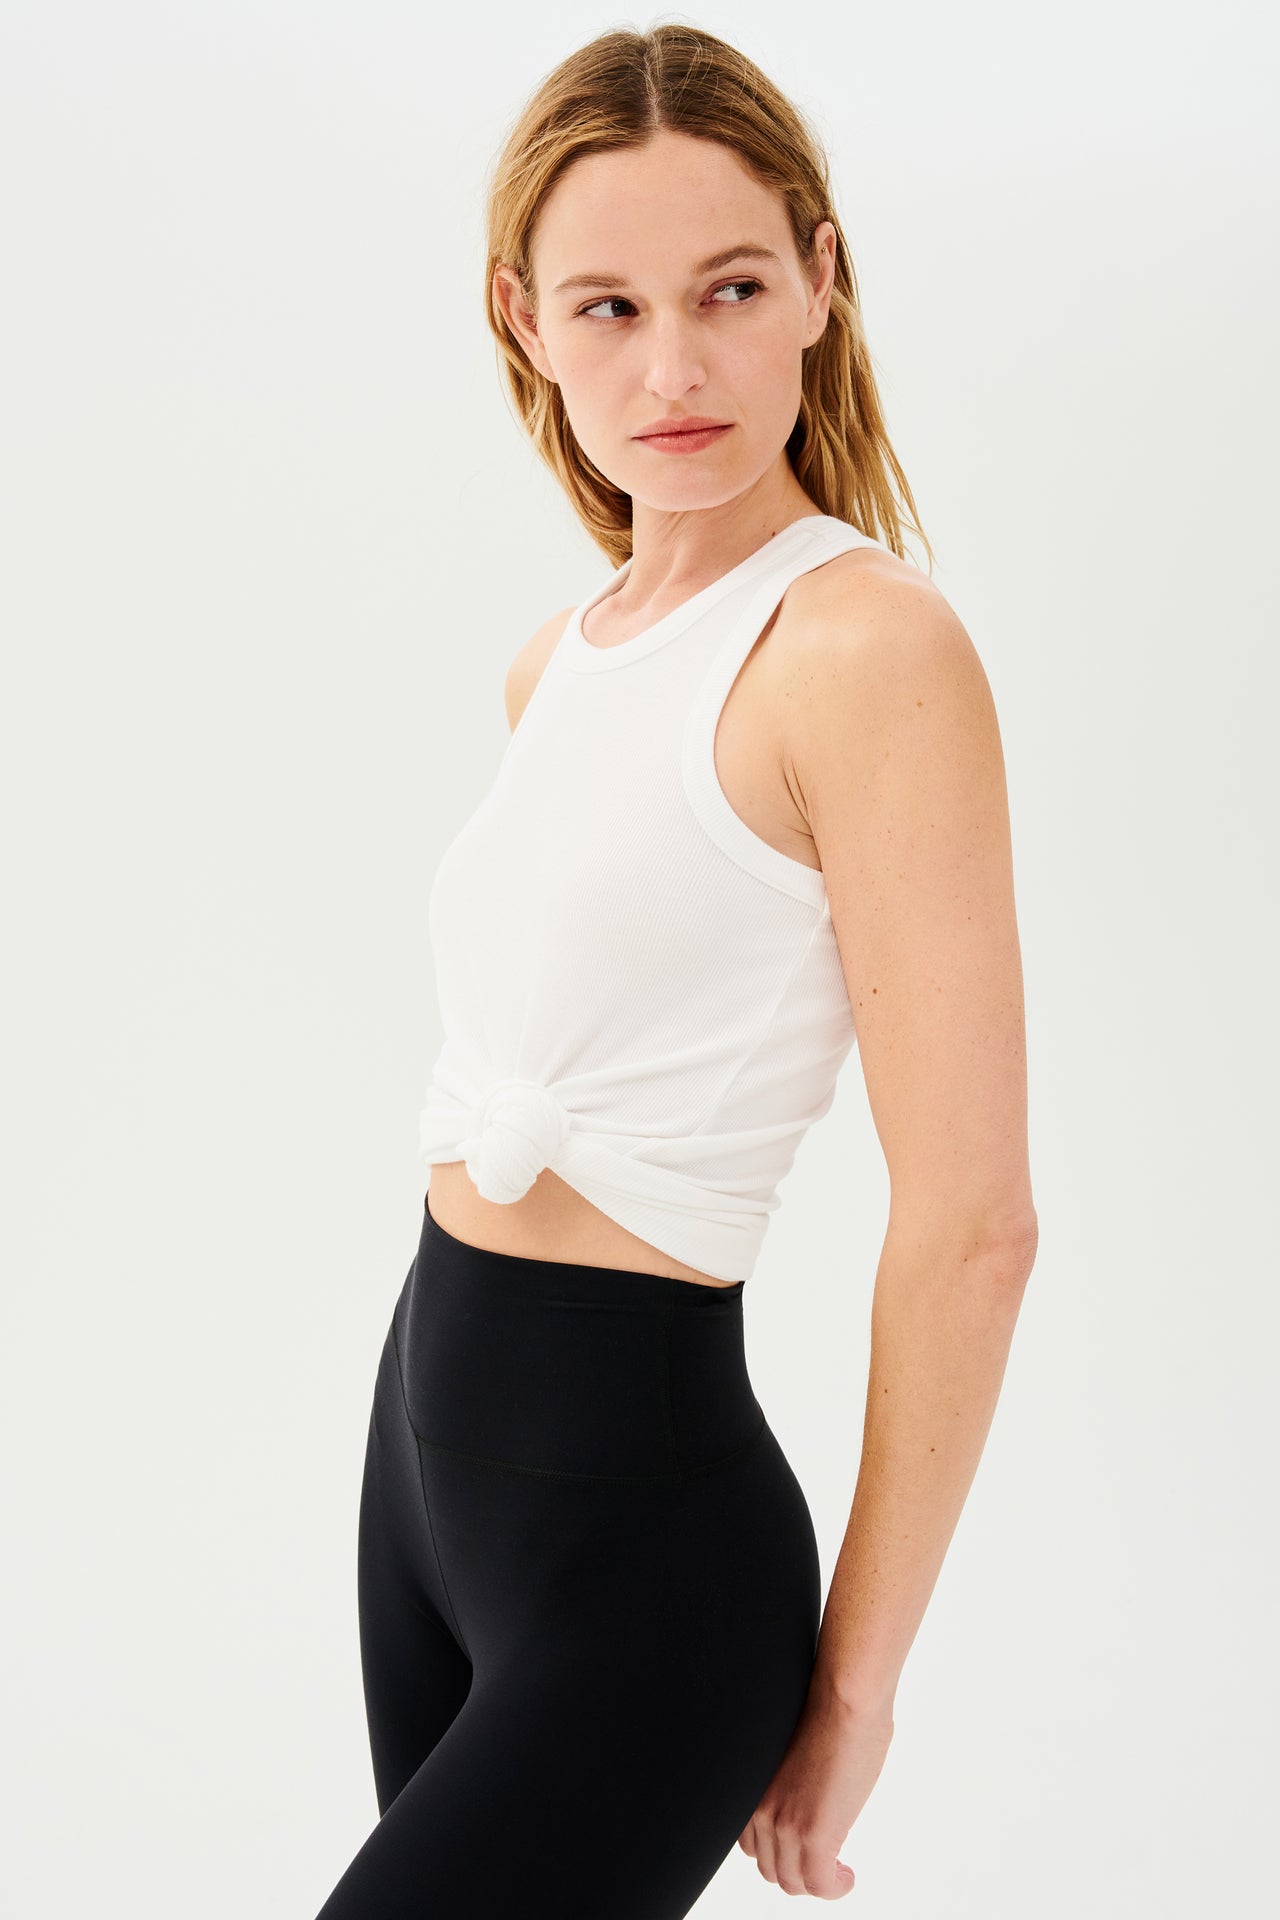 A woman wearing black leggings and a SPLITS59 Kiki Rib Tank Full Length in white for gym workouts.